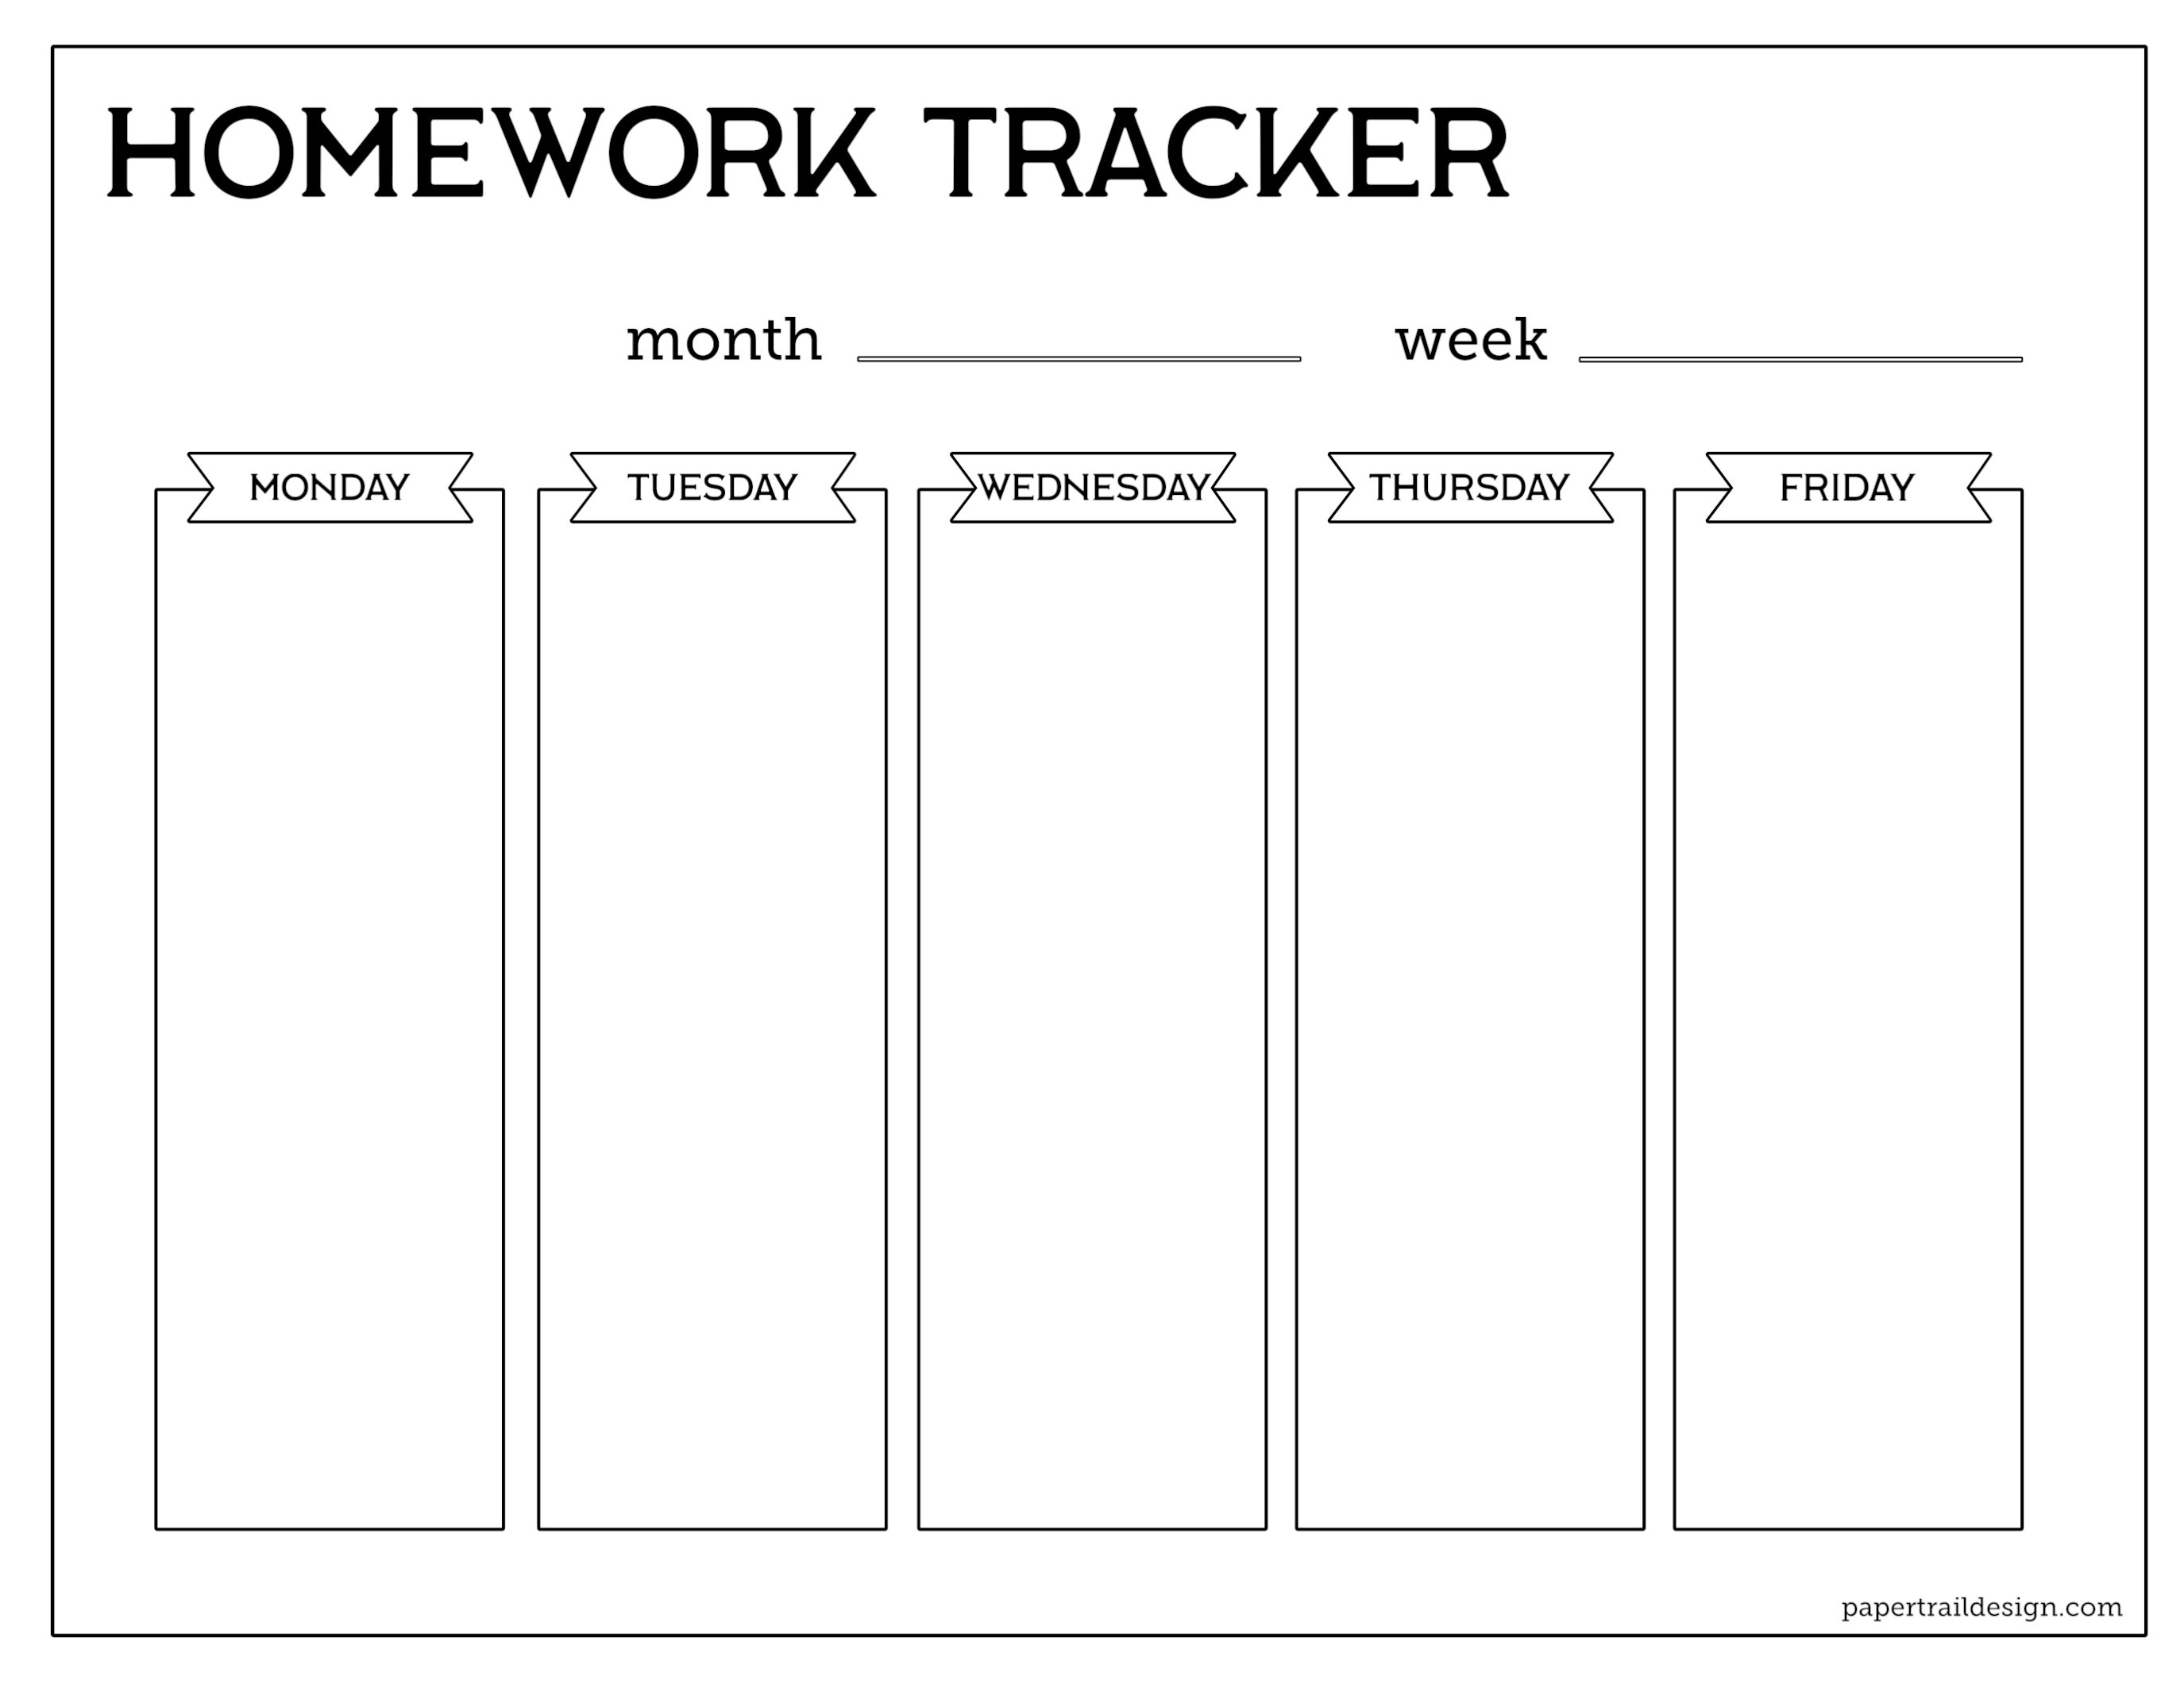 Free Printable Student Homework Planner Template - Paper Trail Design - Free Printable Homework